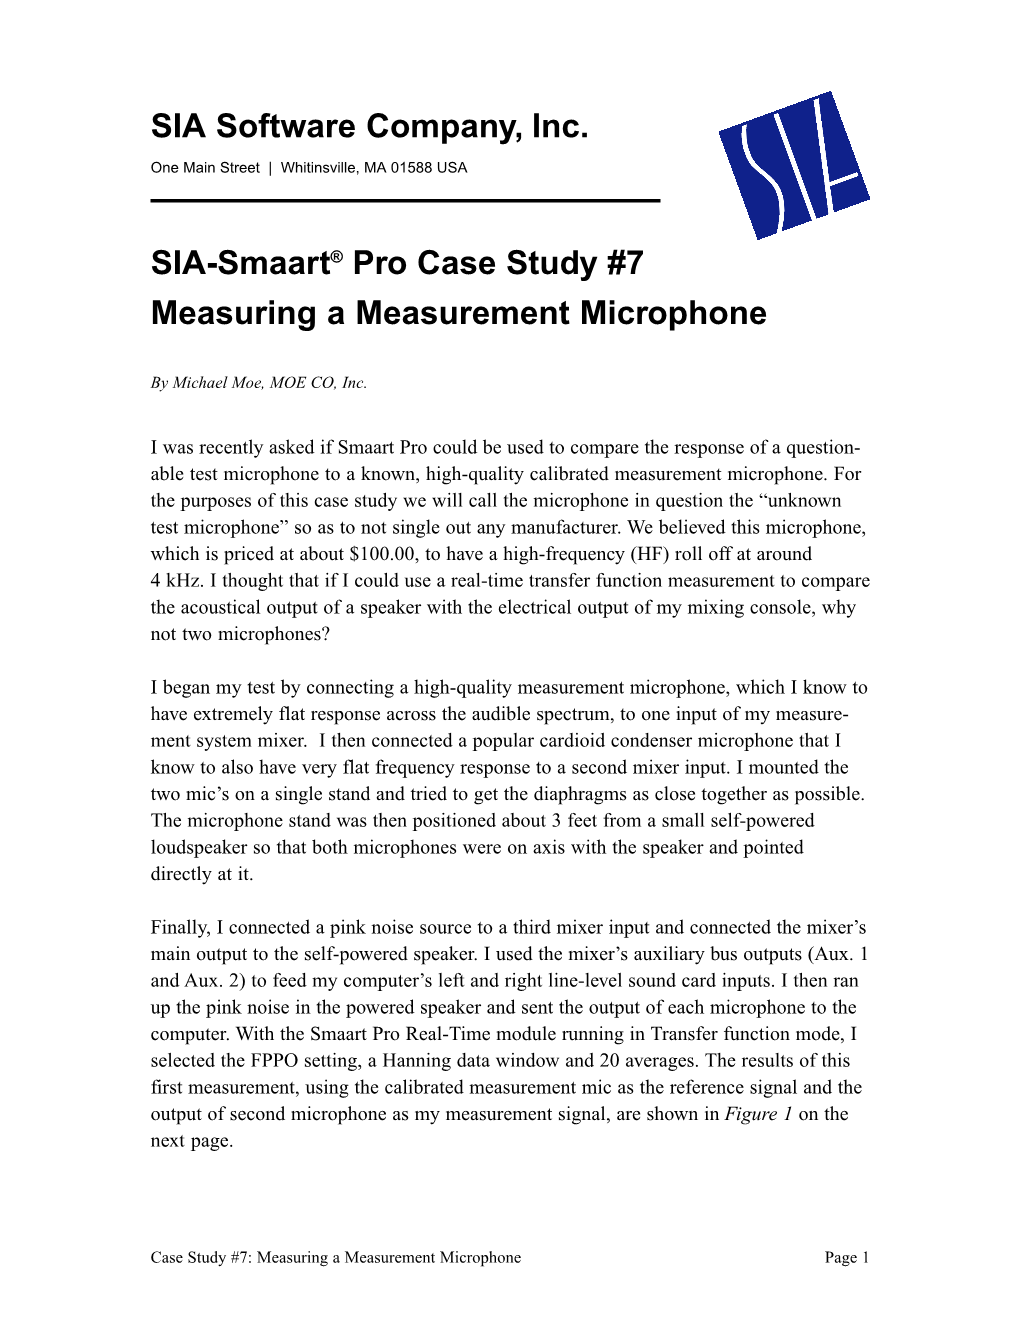 SIA-Smaart® Pro Case Study #7 Measuring a Measurement Microphone